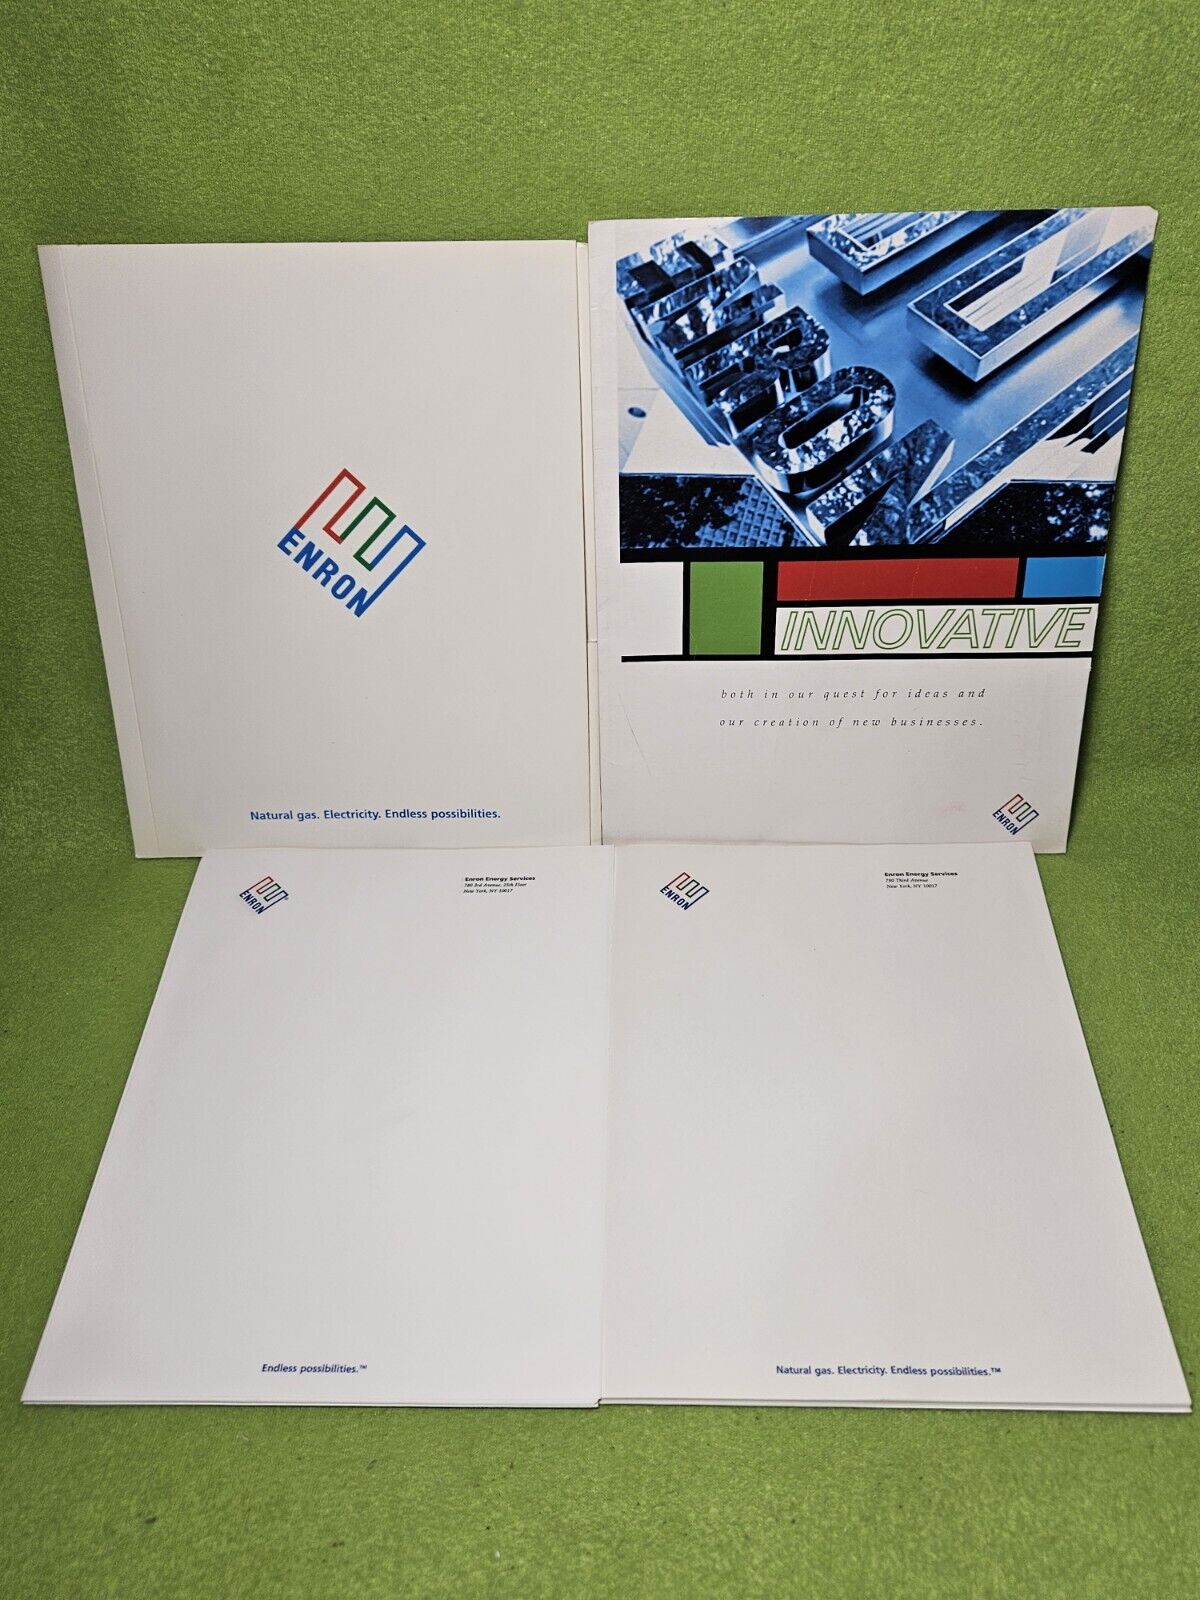 ENRON Corporate Folders & Letter Head Paper Lot - Rare Collector's Item